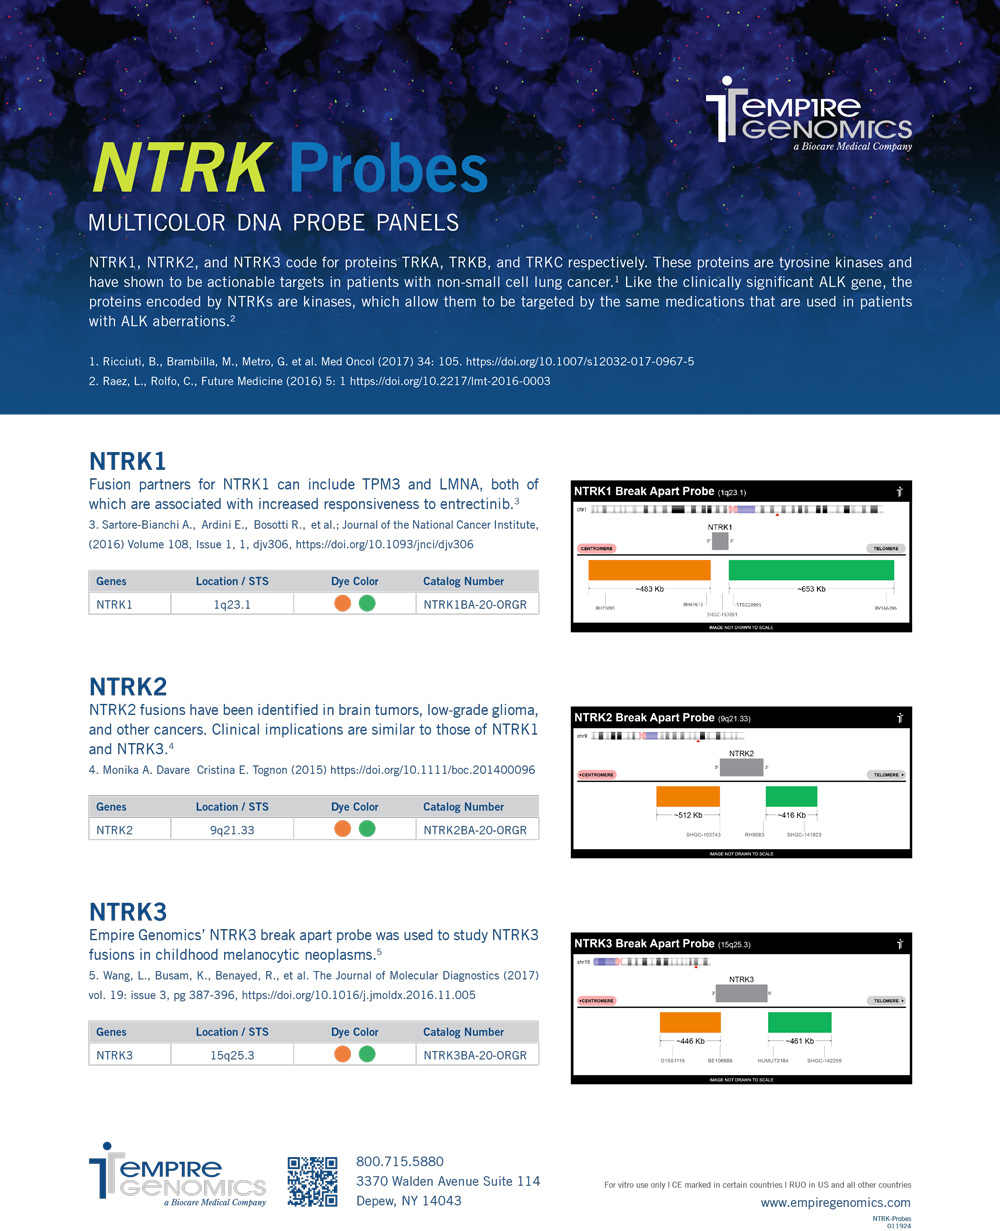 NTRK Probes